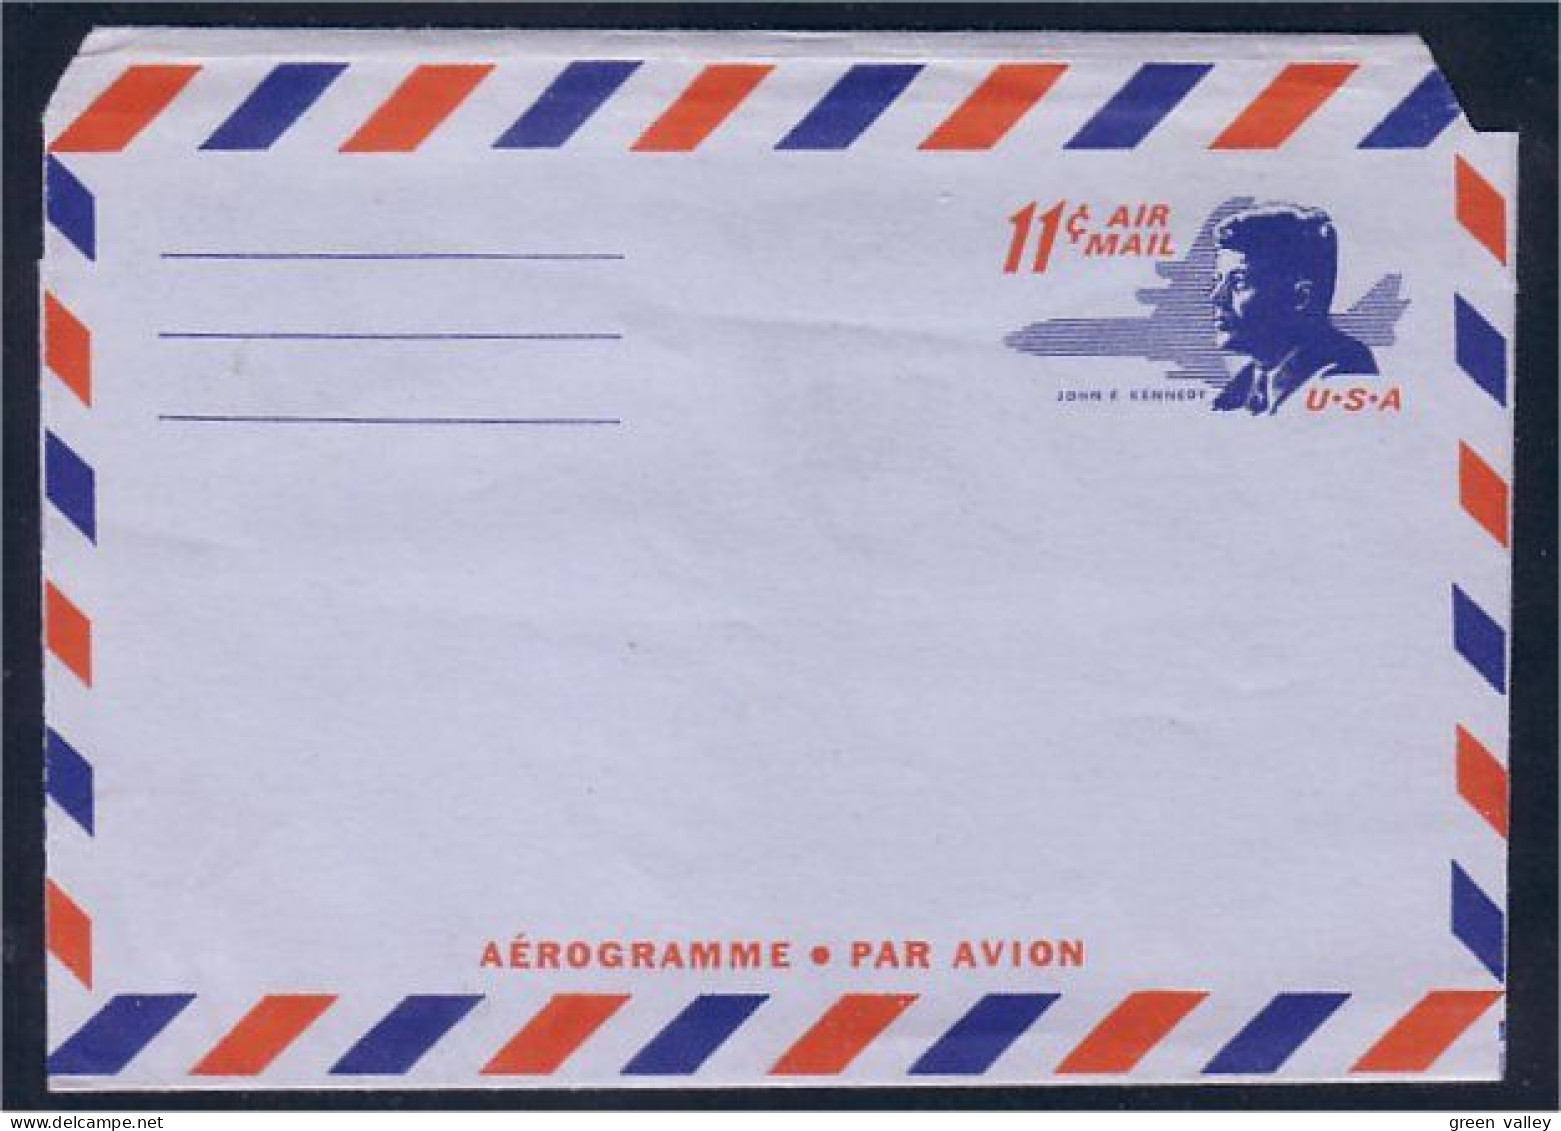 Aerogramme Air Letter Kennedy 11c Air Mail ( A82 109) - Unabhängigkeit USA